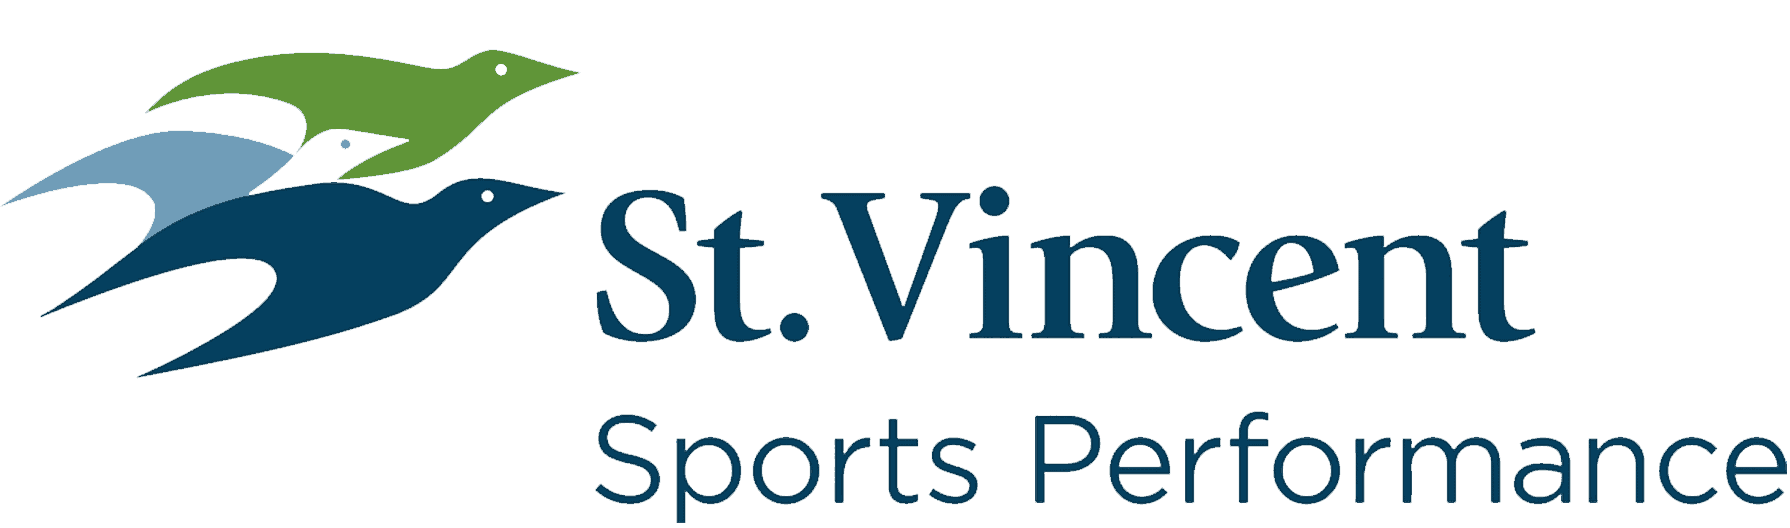 St Vincent CHARGE client a sponsorship marketing agency